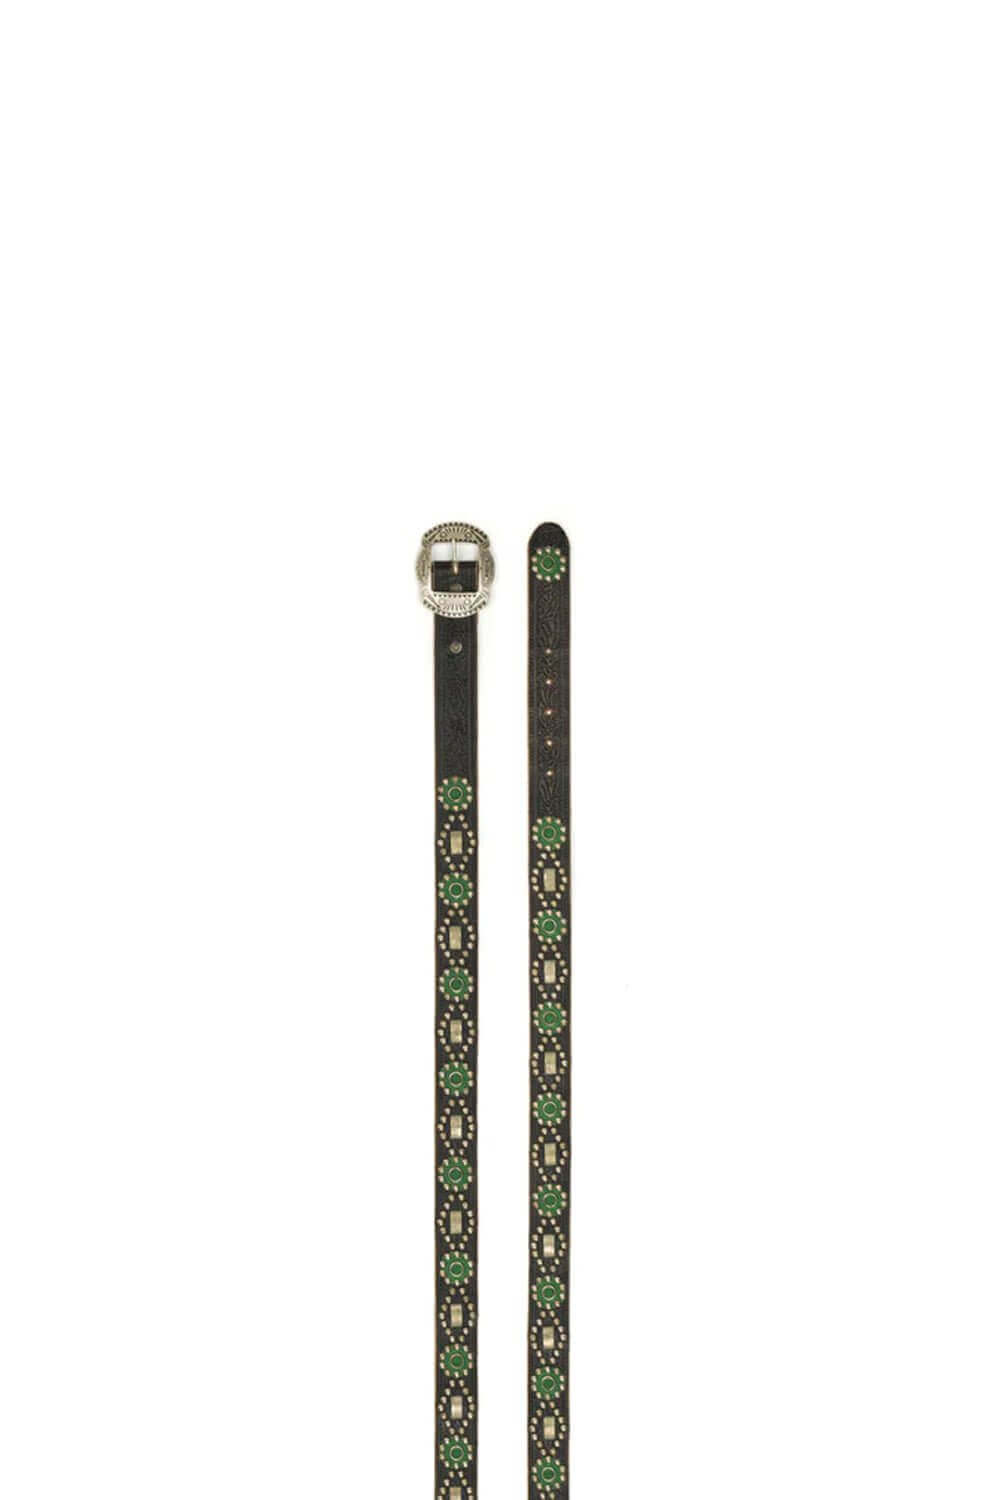 FIGUEROA BELT Black vintage leather belt with studs. Brass buckle. Height: 4 cm. HTC LOS ANGELES